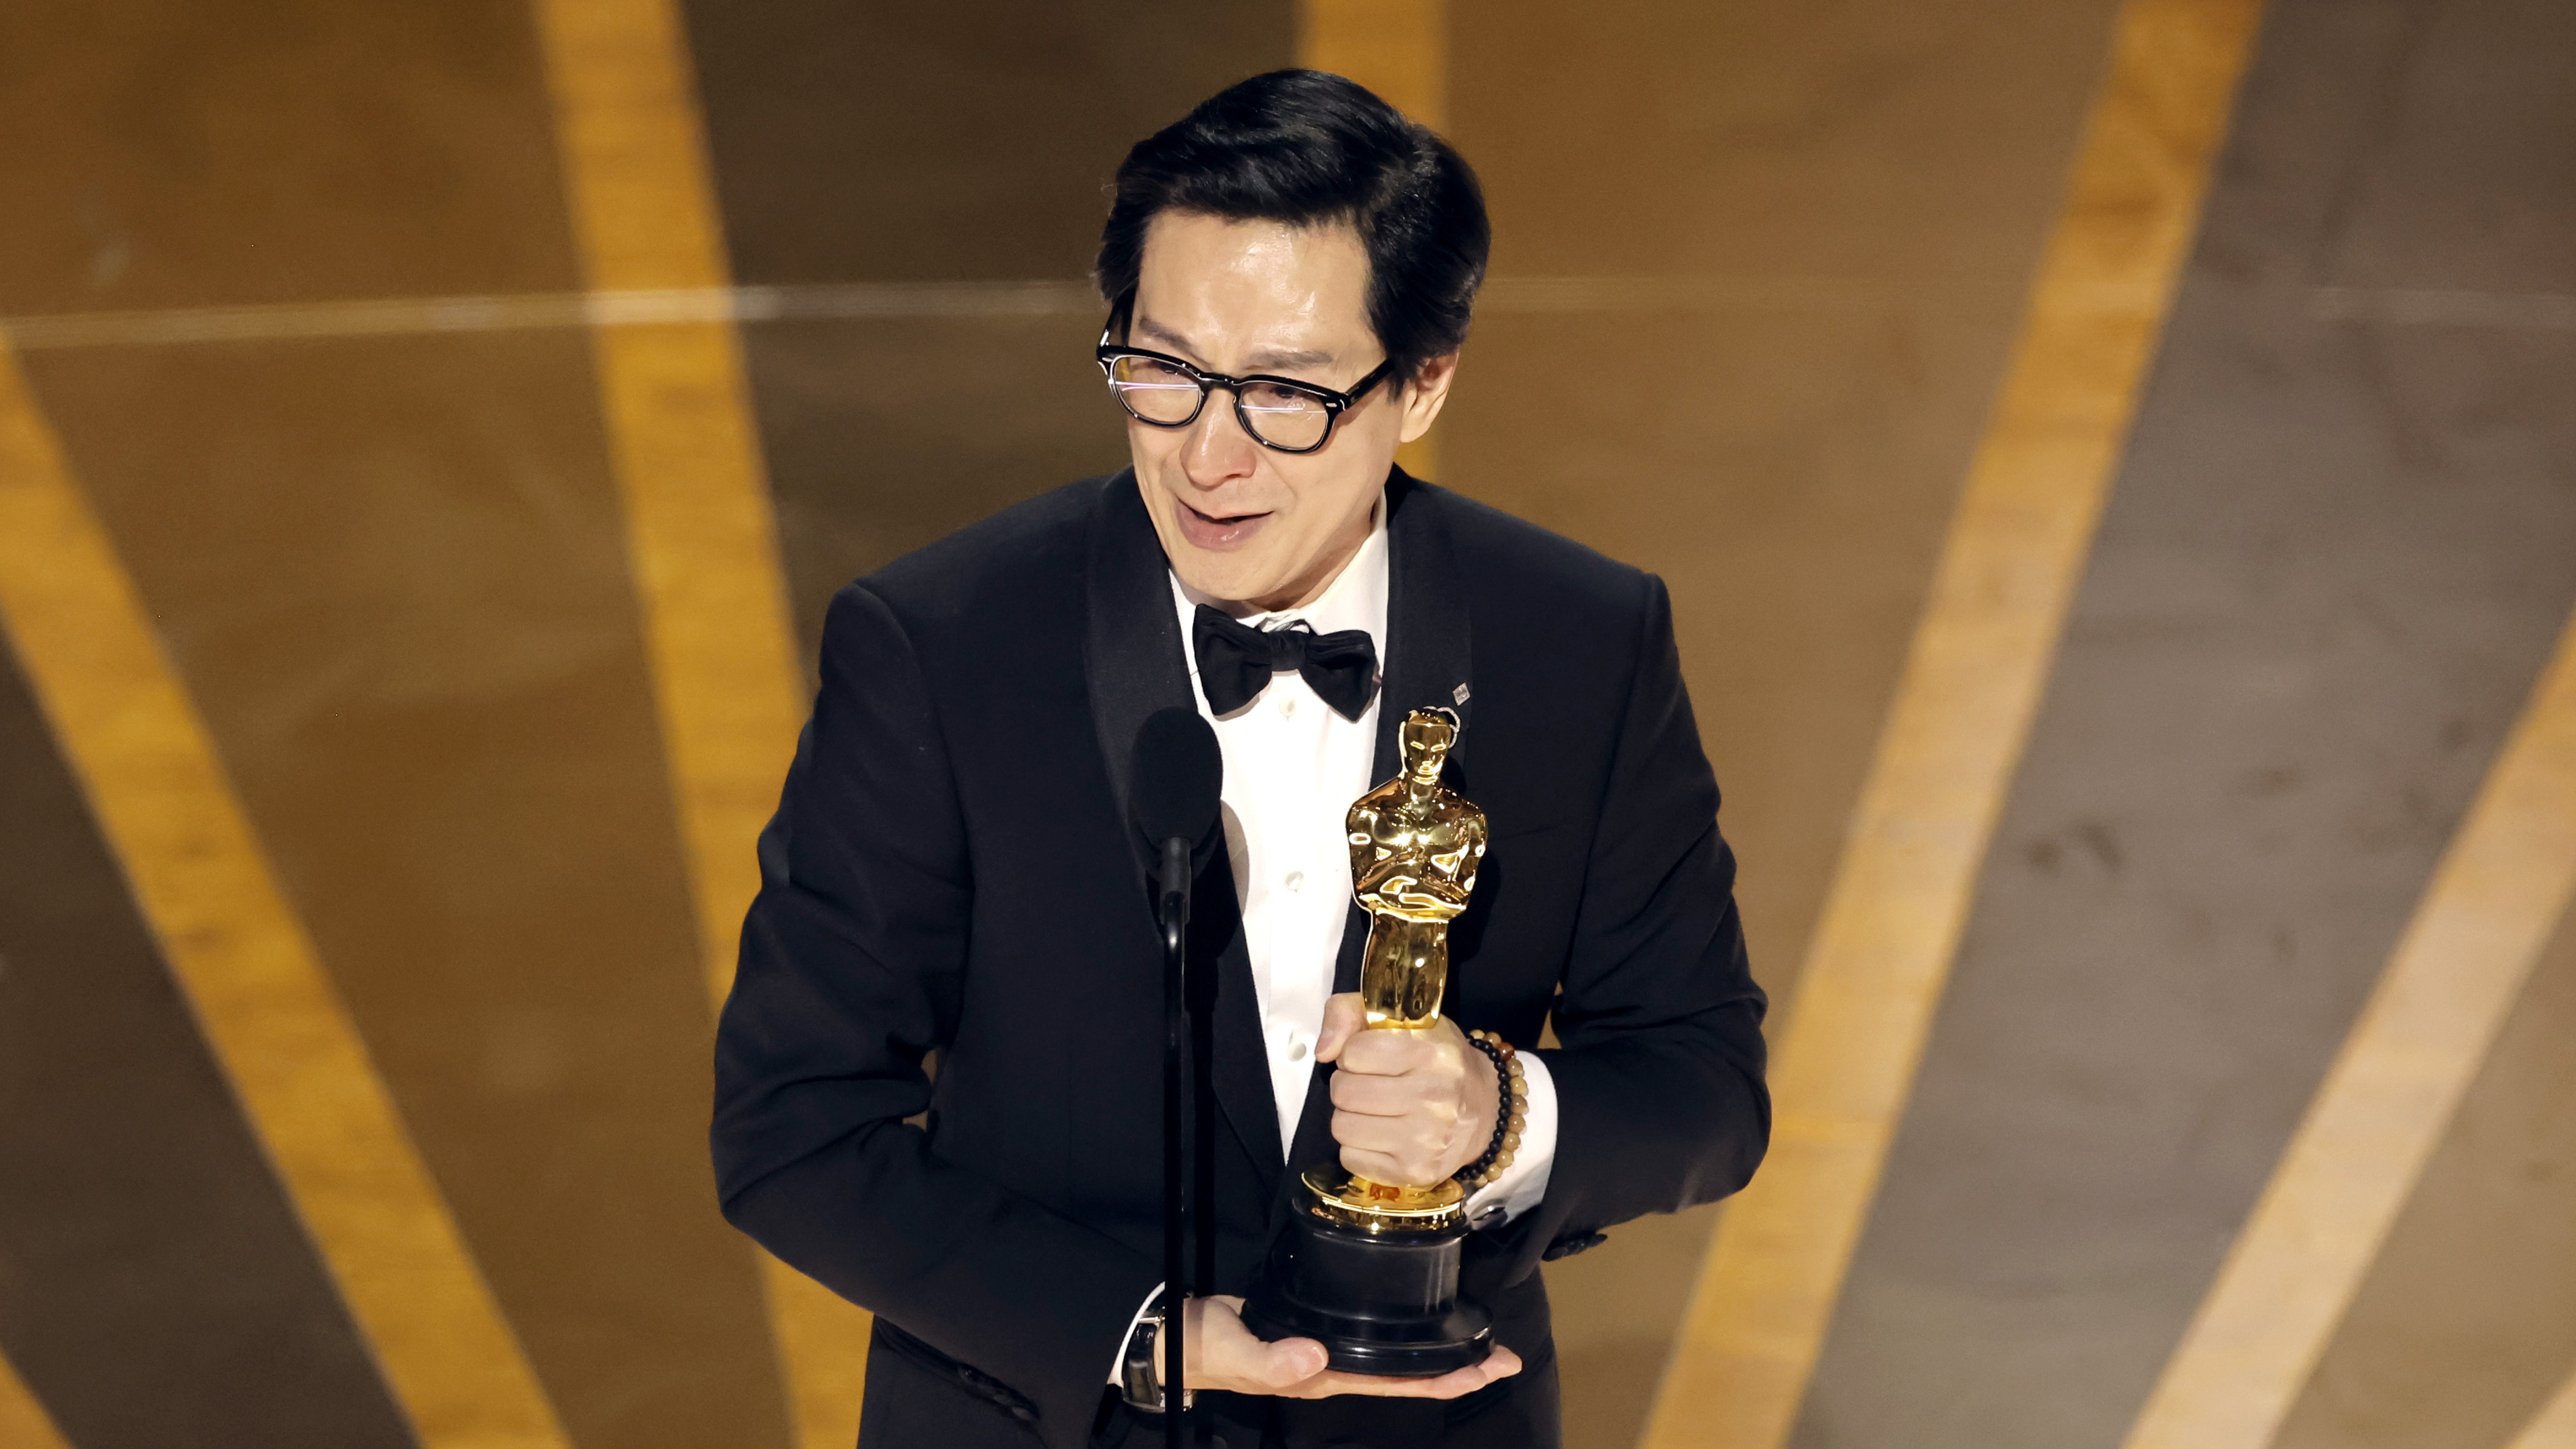 Ke Huy Quan accepting an Oscar